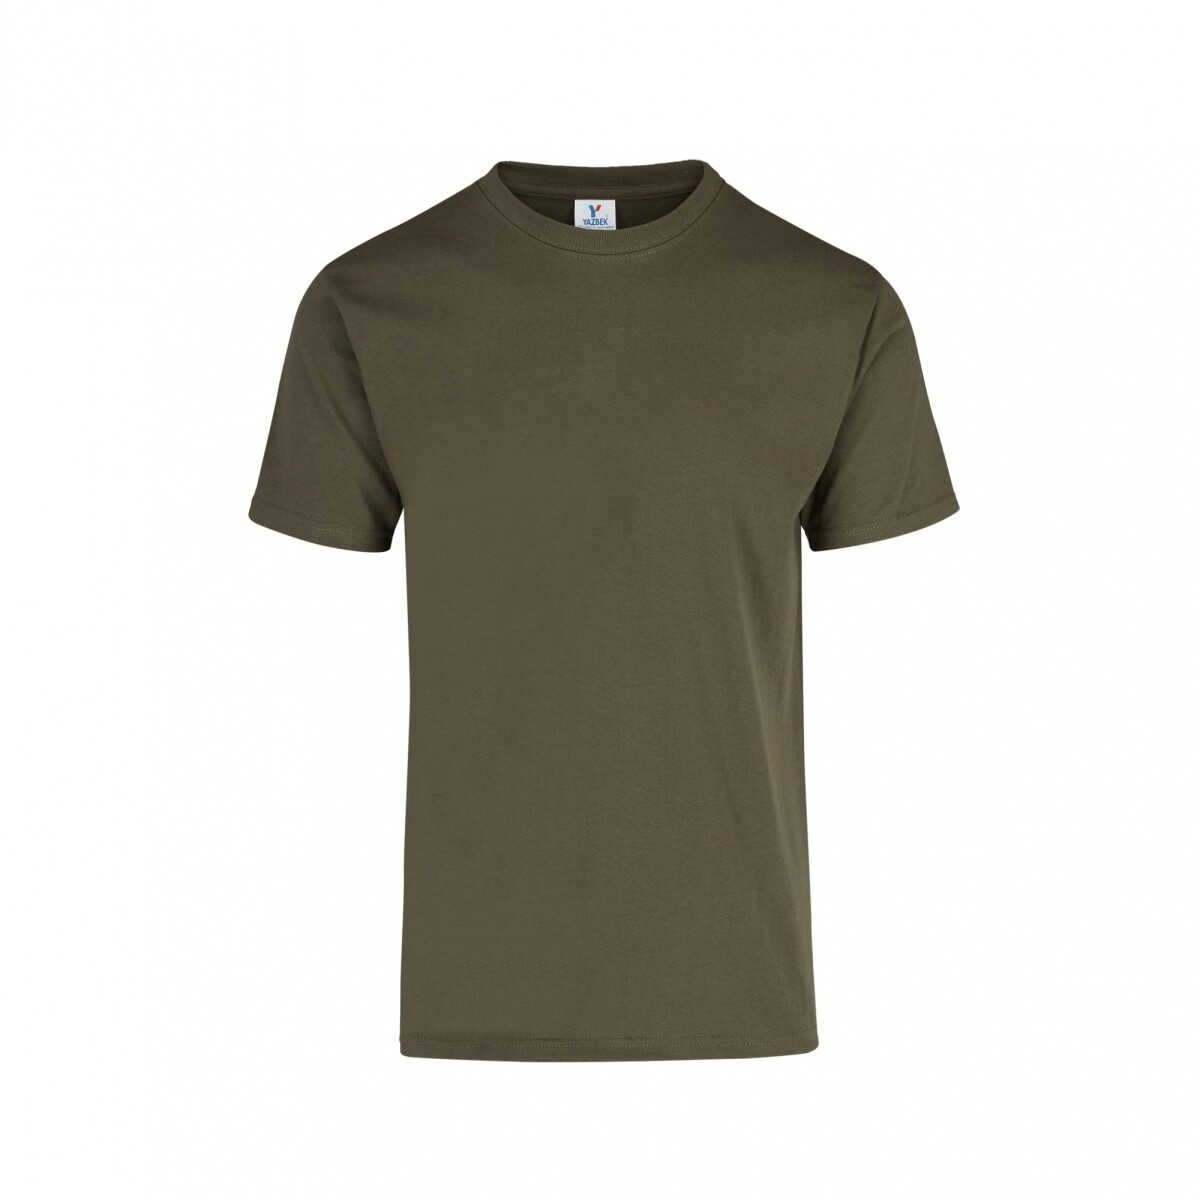 Camiseta a la base peso completo - Verde olivo 